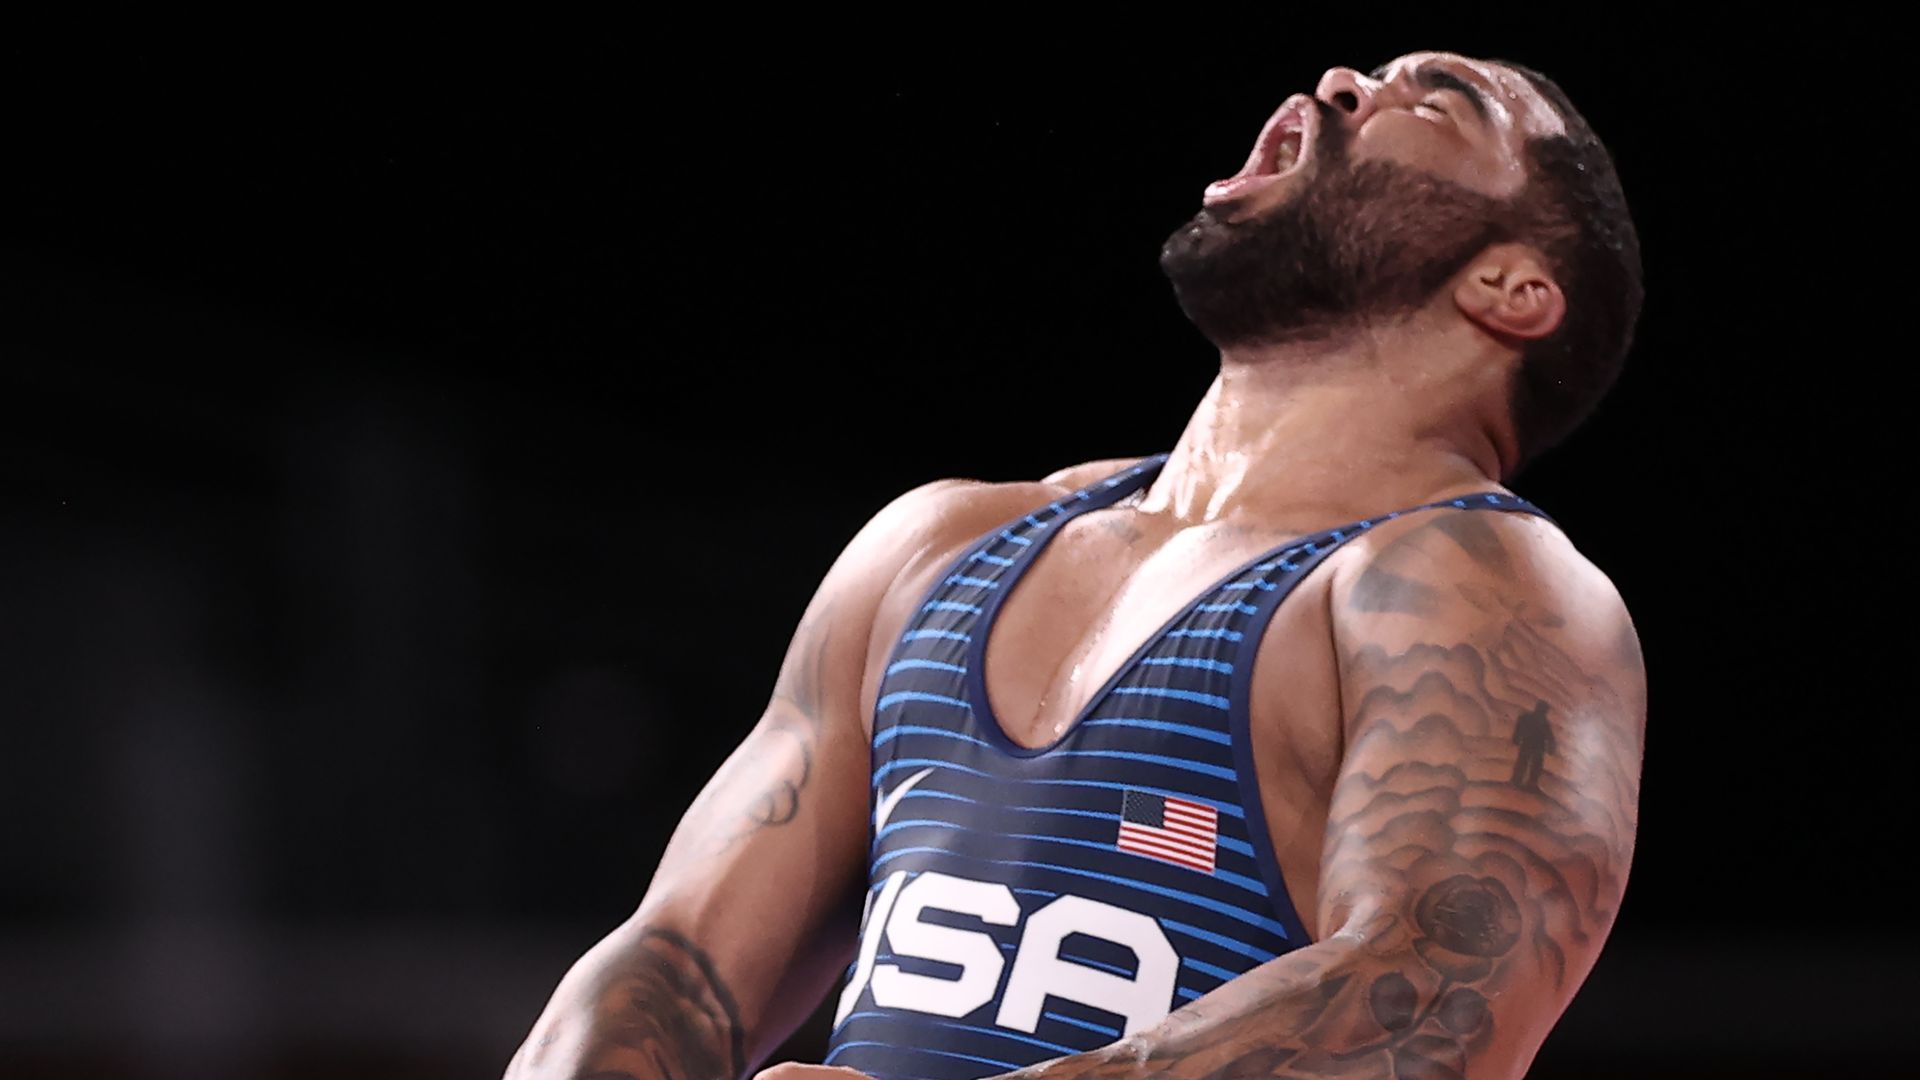 U.S. heavyweight wrestler Gable Steveson wins Olympic gold in last